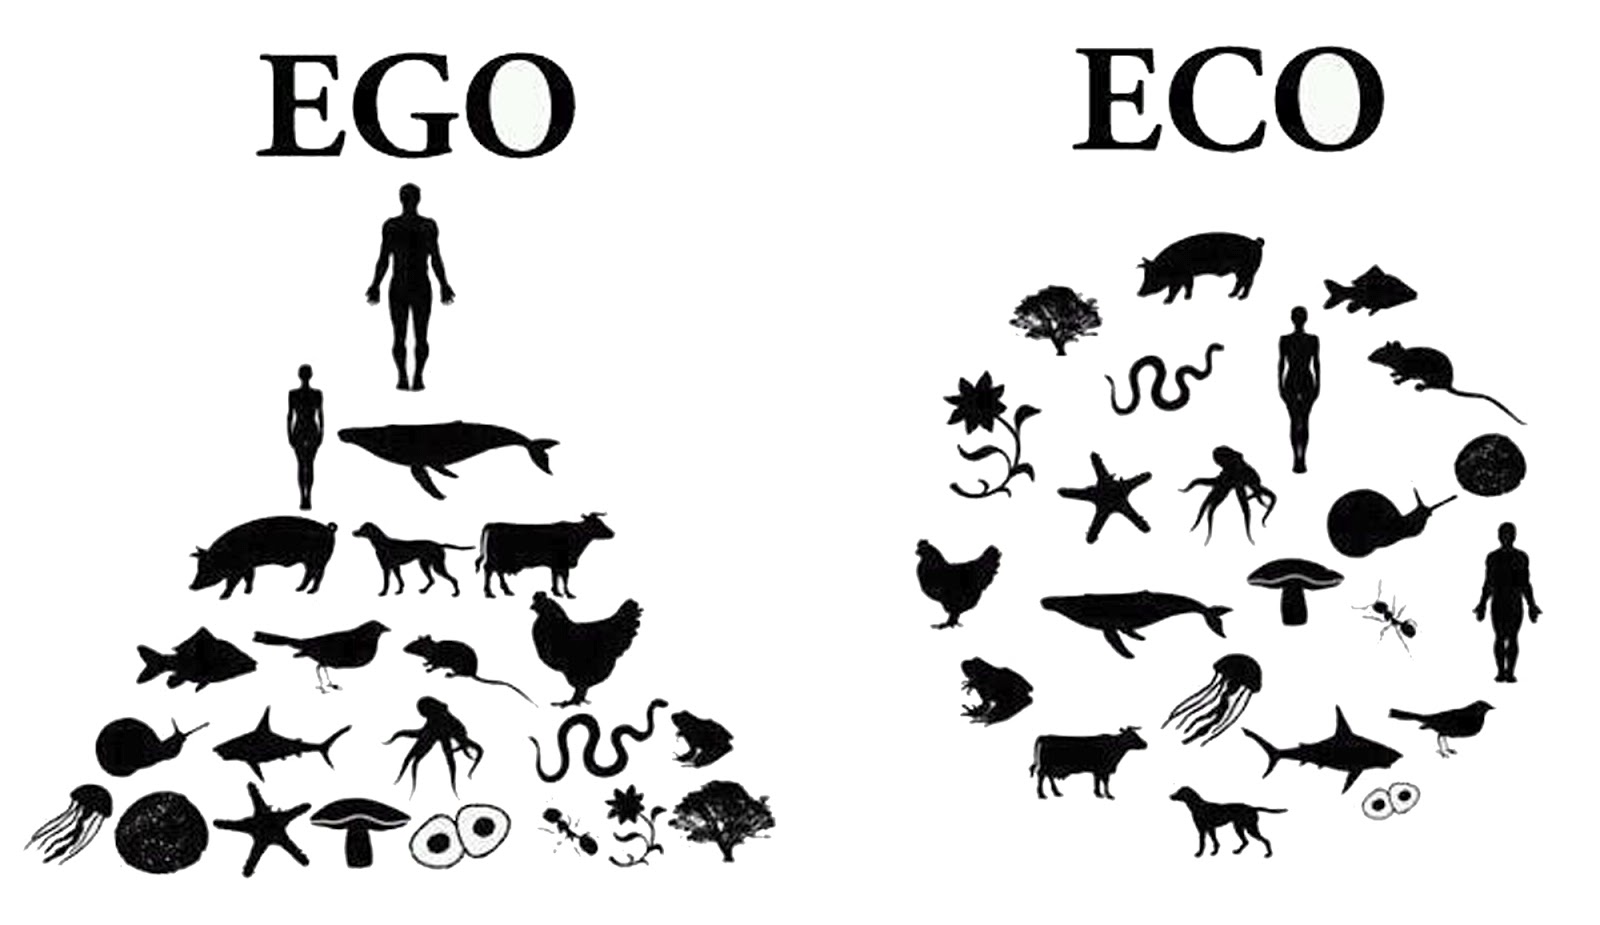 ego-eco_vegleges.jpg